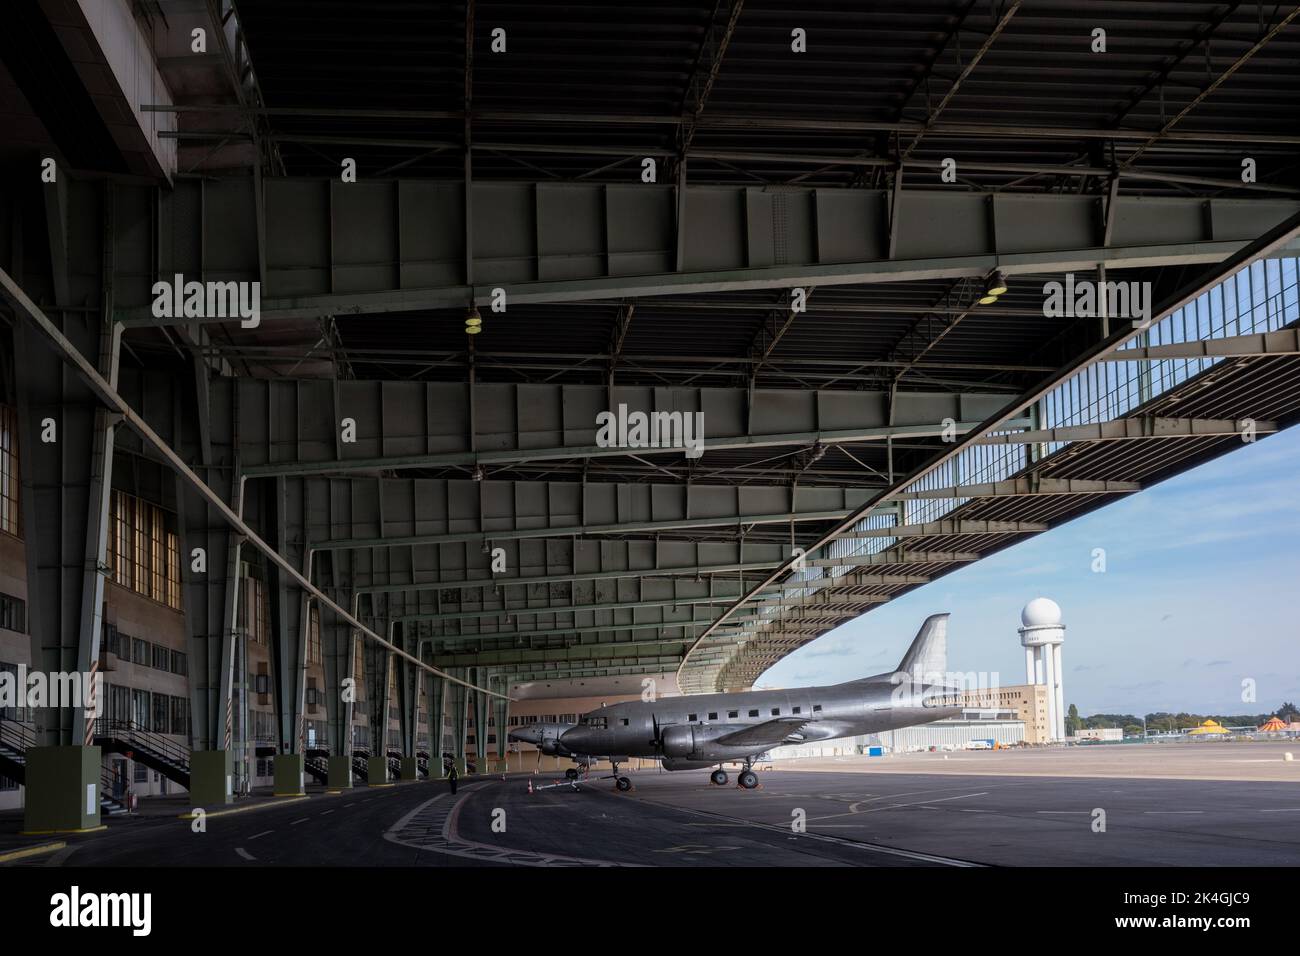 Flughafen Tempelhof, ancien aéroport de Berlin, Allemagne. Banque D'Images